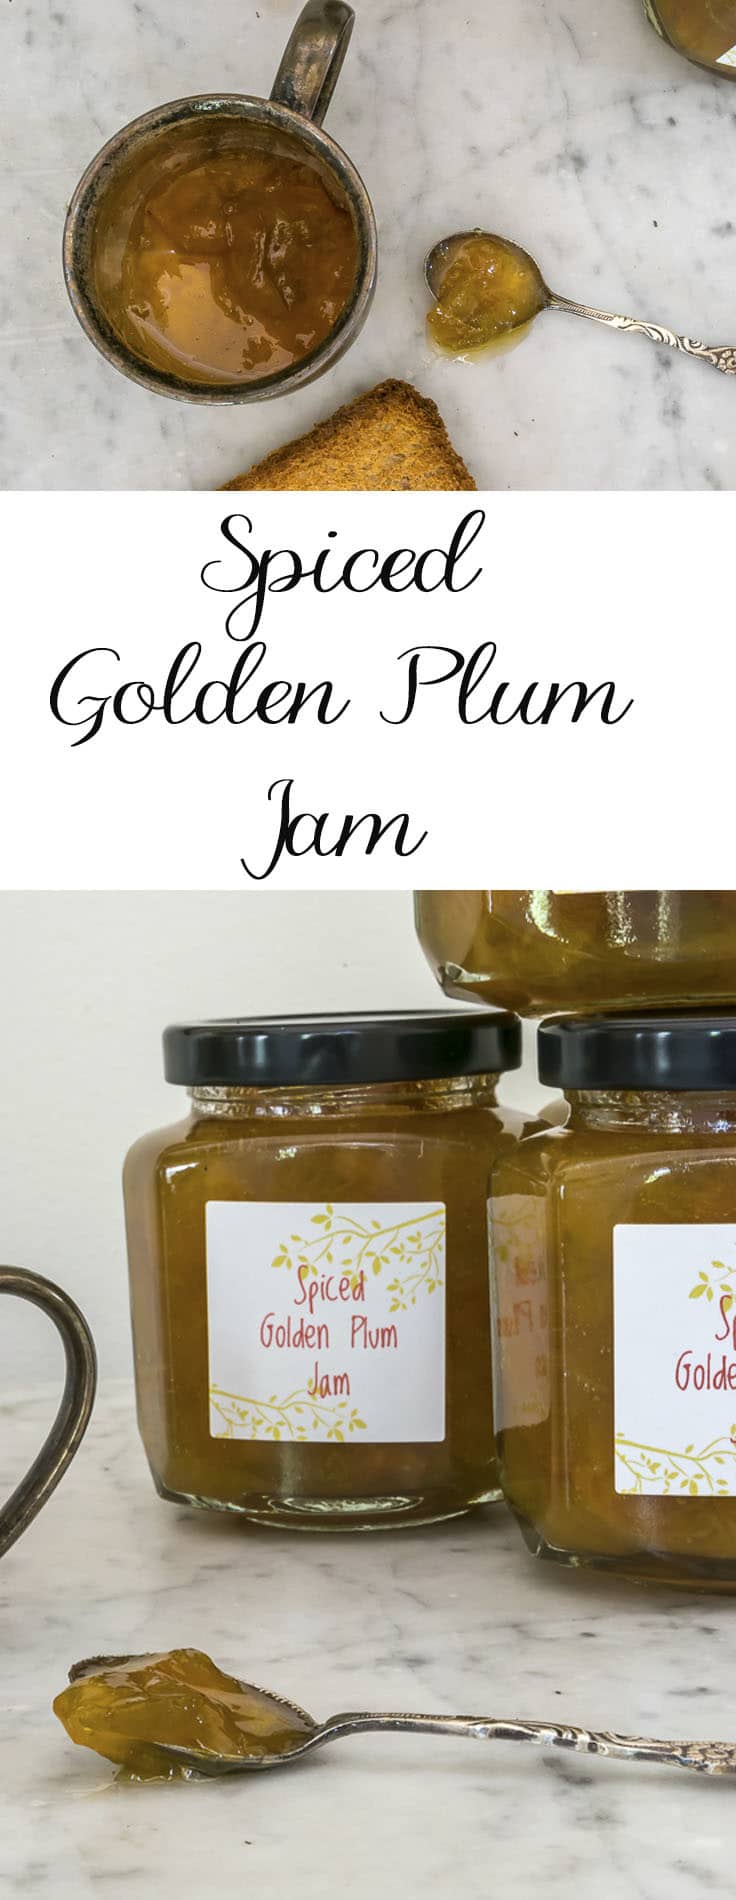 Spiced Golden Plum Jam Recipe